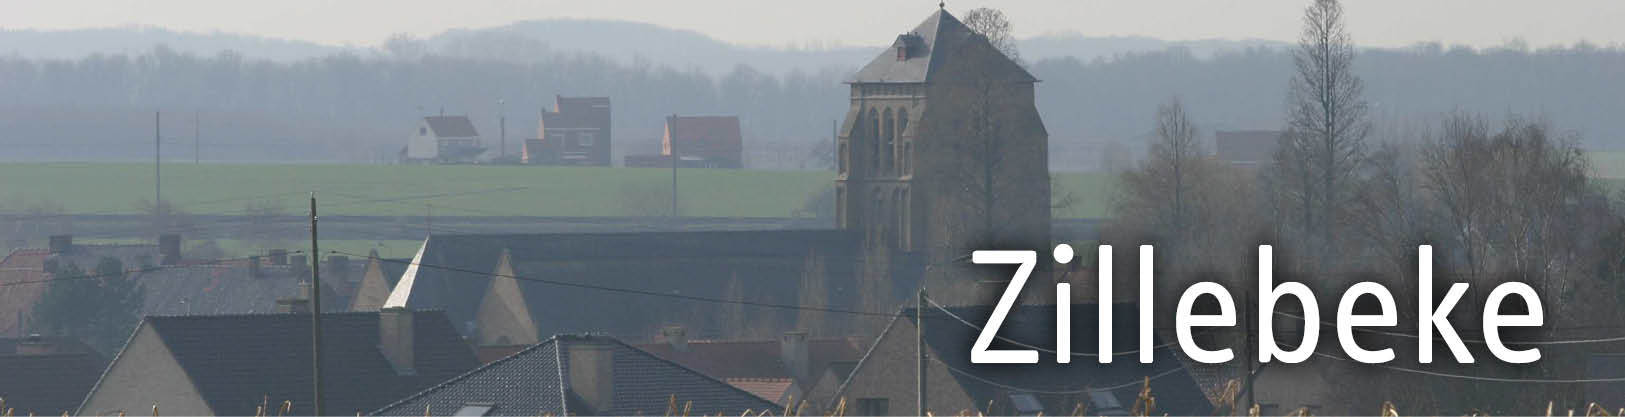 Kerk en landschapsfoto Zillebeke